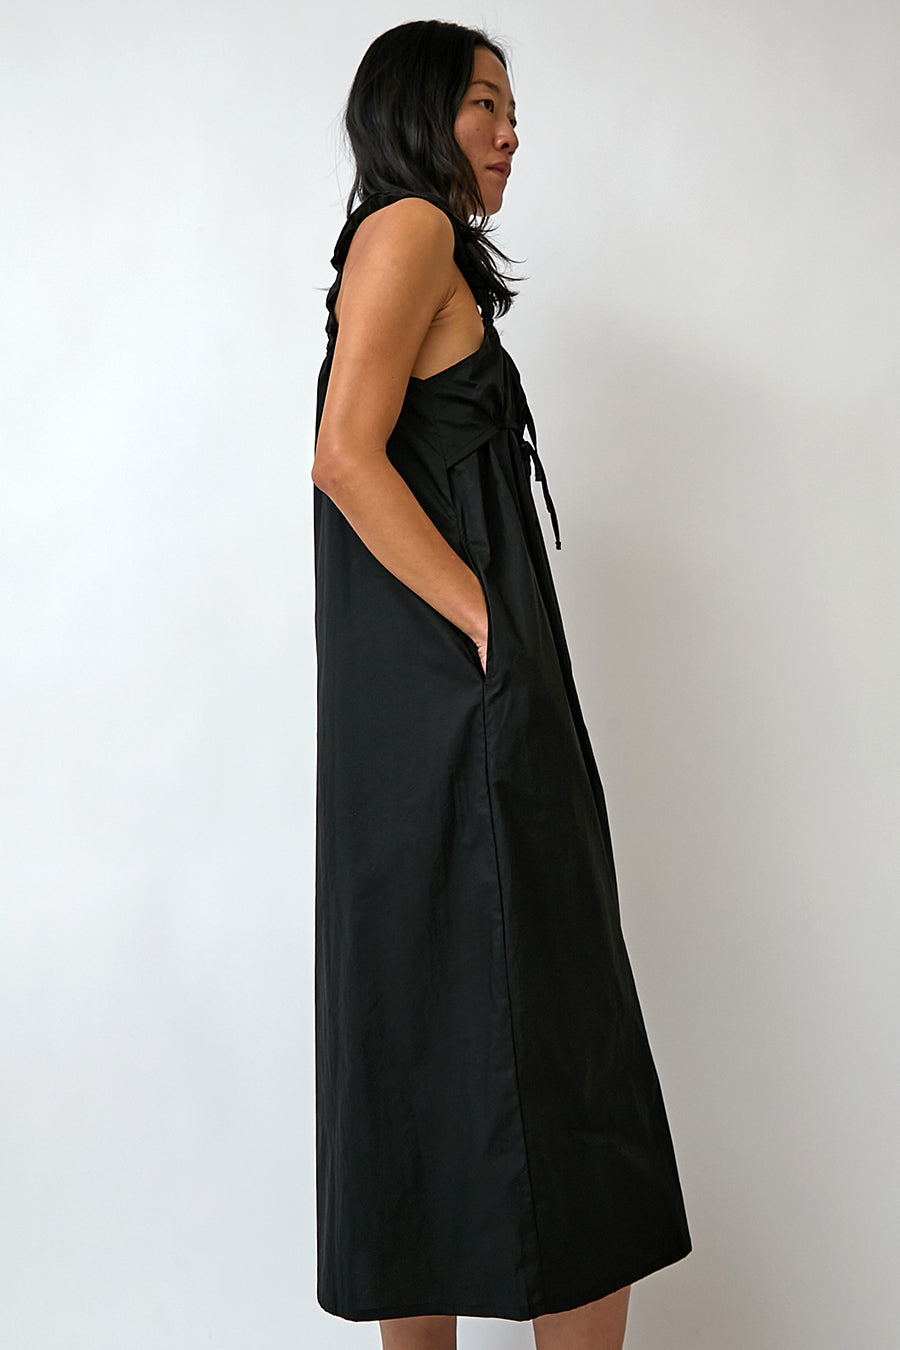 Deiji Studios Ruched Tie Dress in Black